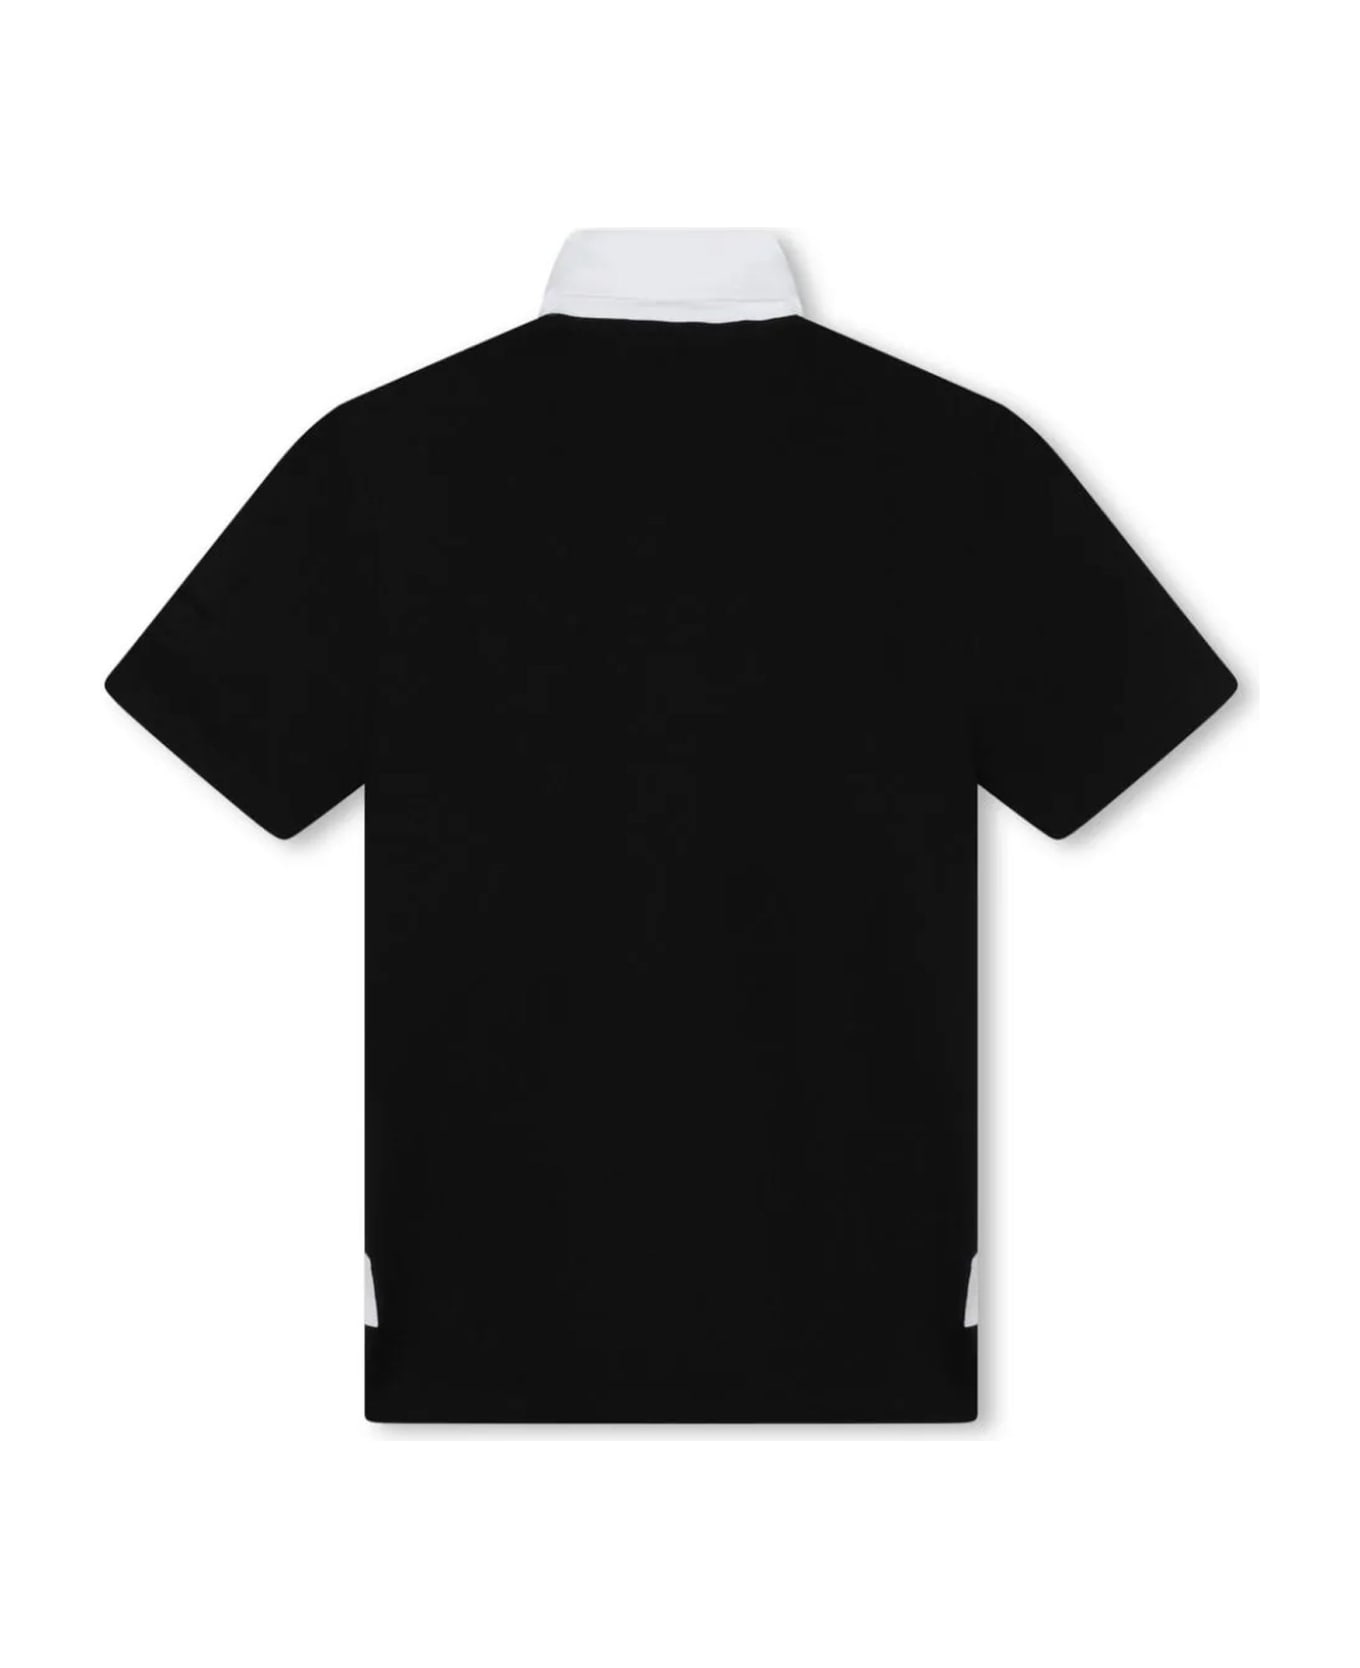 Givenchy Kids T-shirts And Polos Black - Black